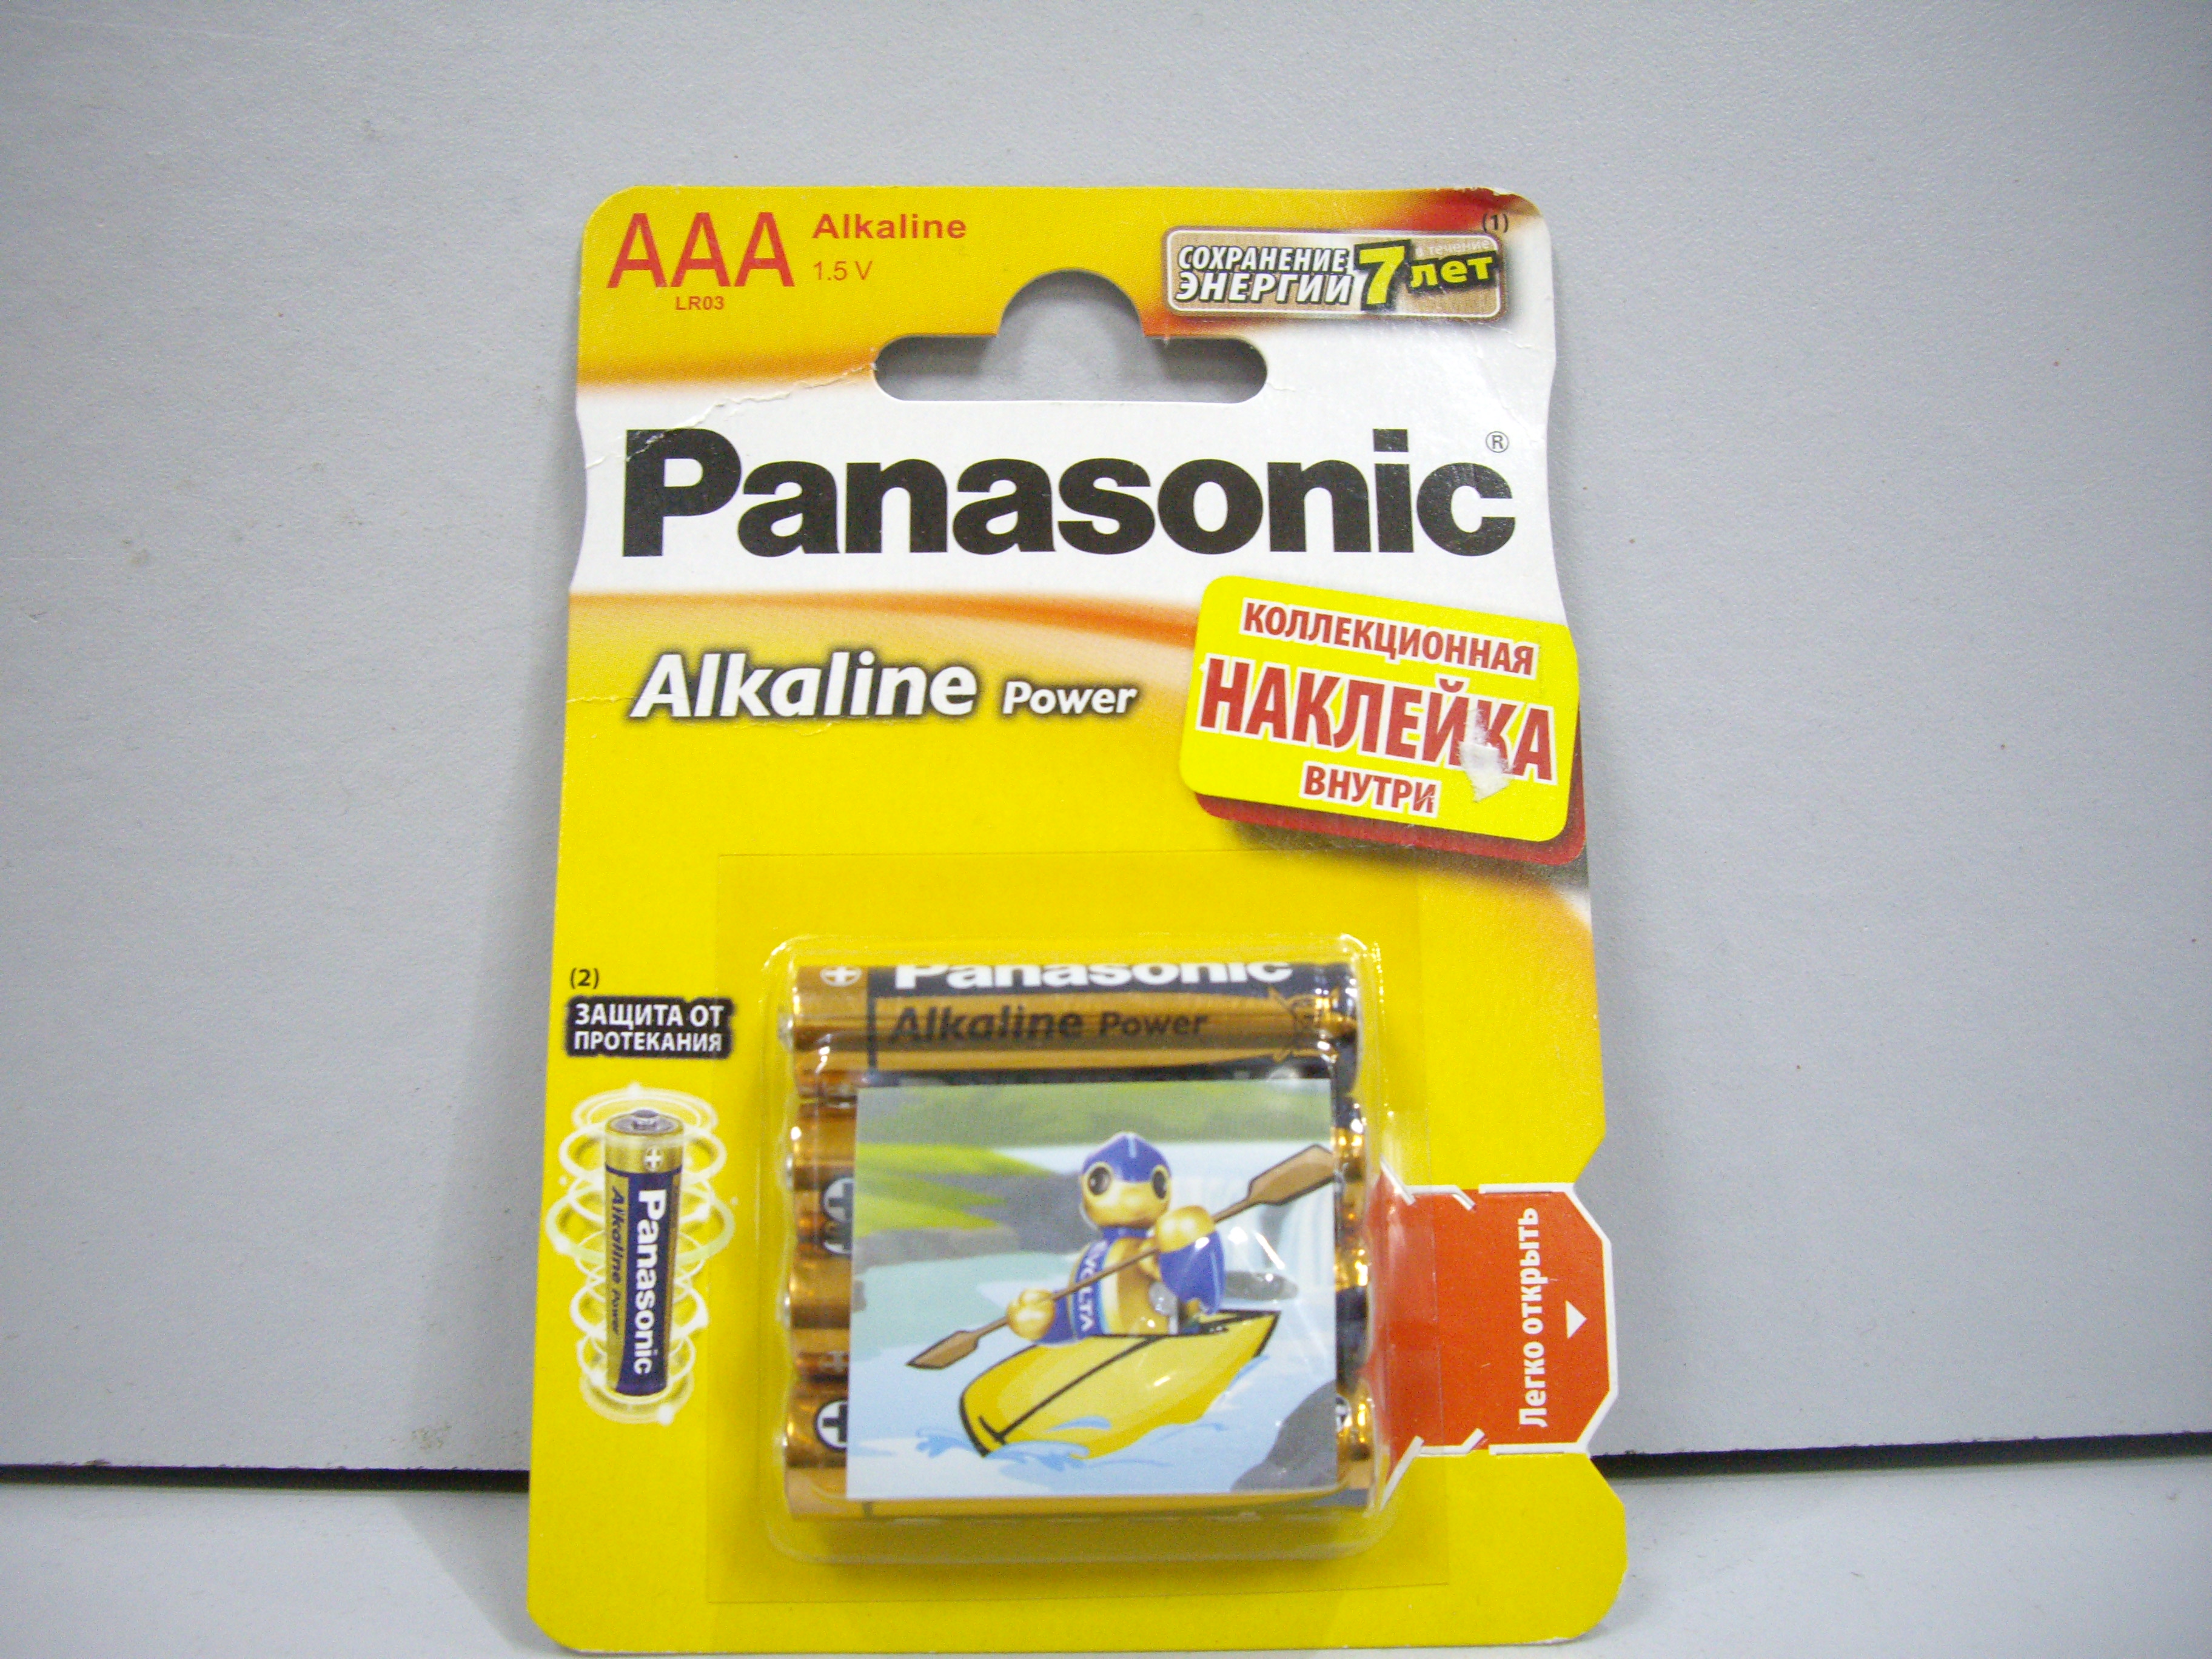 Алкалиновые  батарейки Panasonic
LR3(AAA)
Цена 35 р/шт.